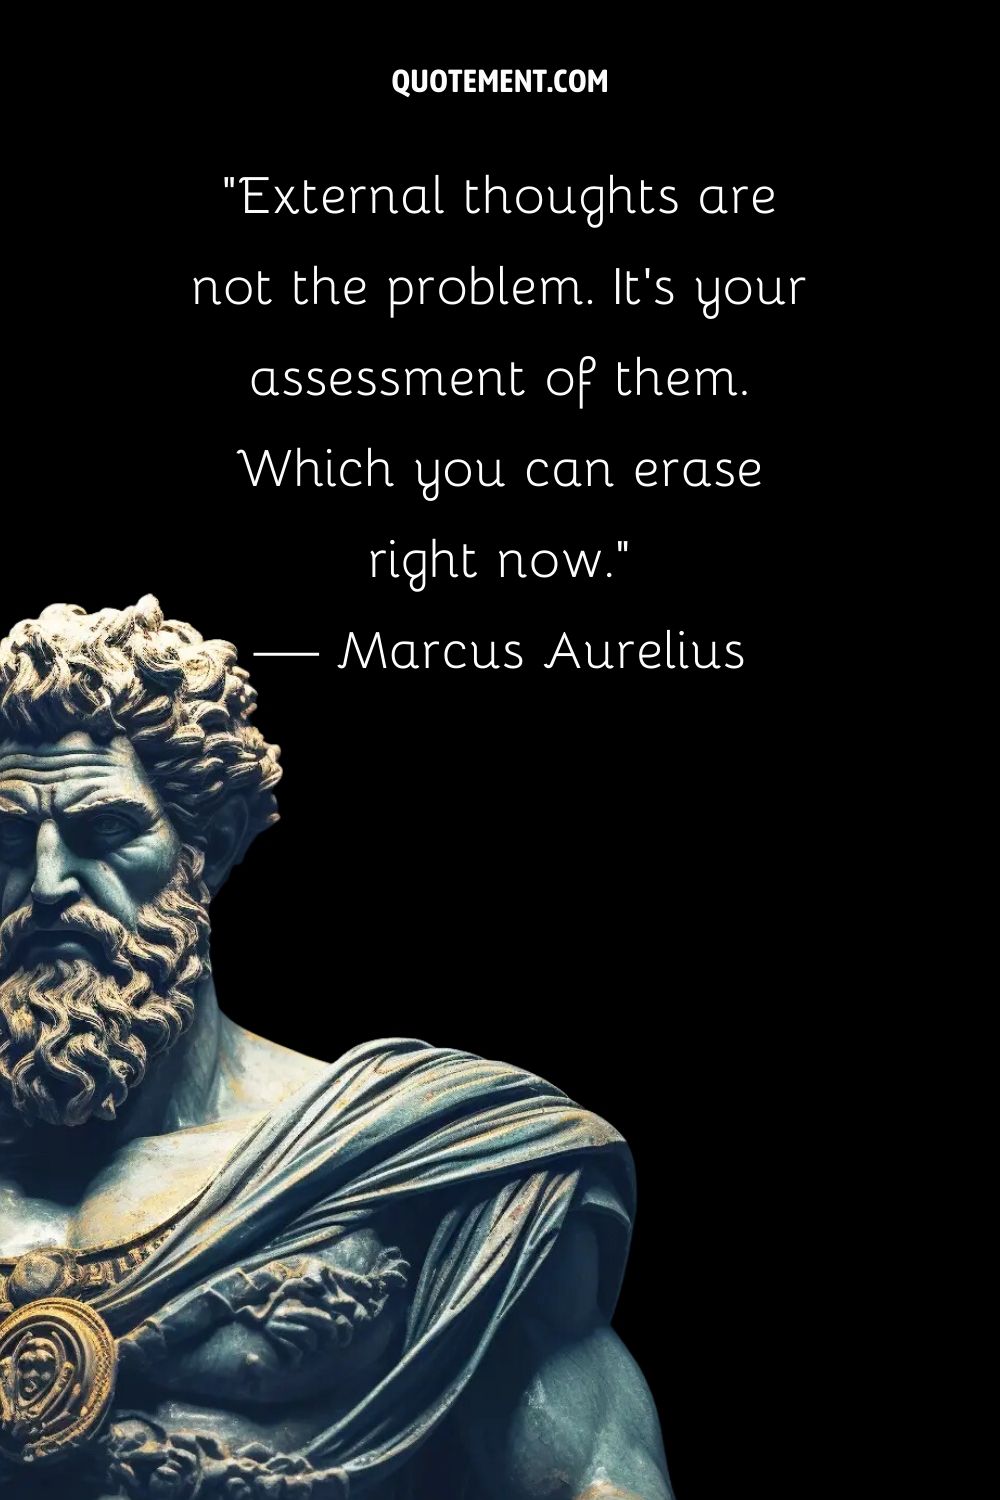 Marble Marcus Stoic wisdom frozen in serenity.